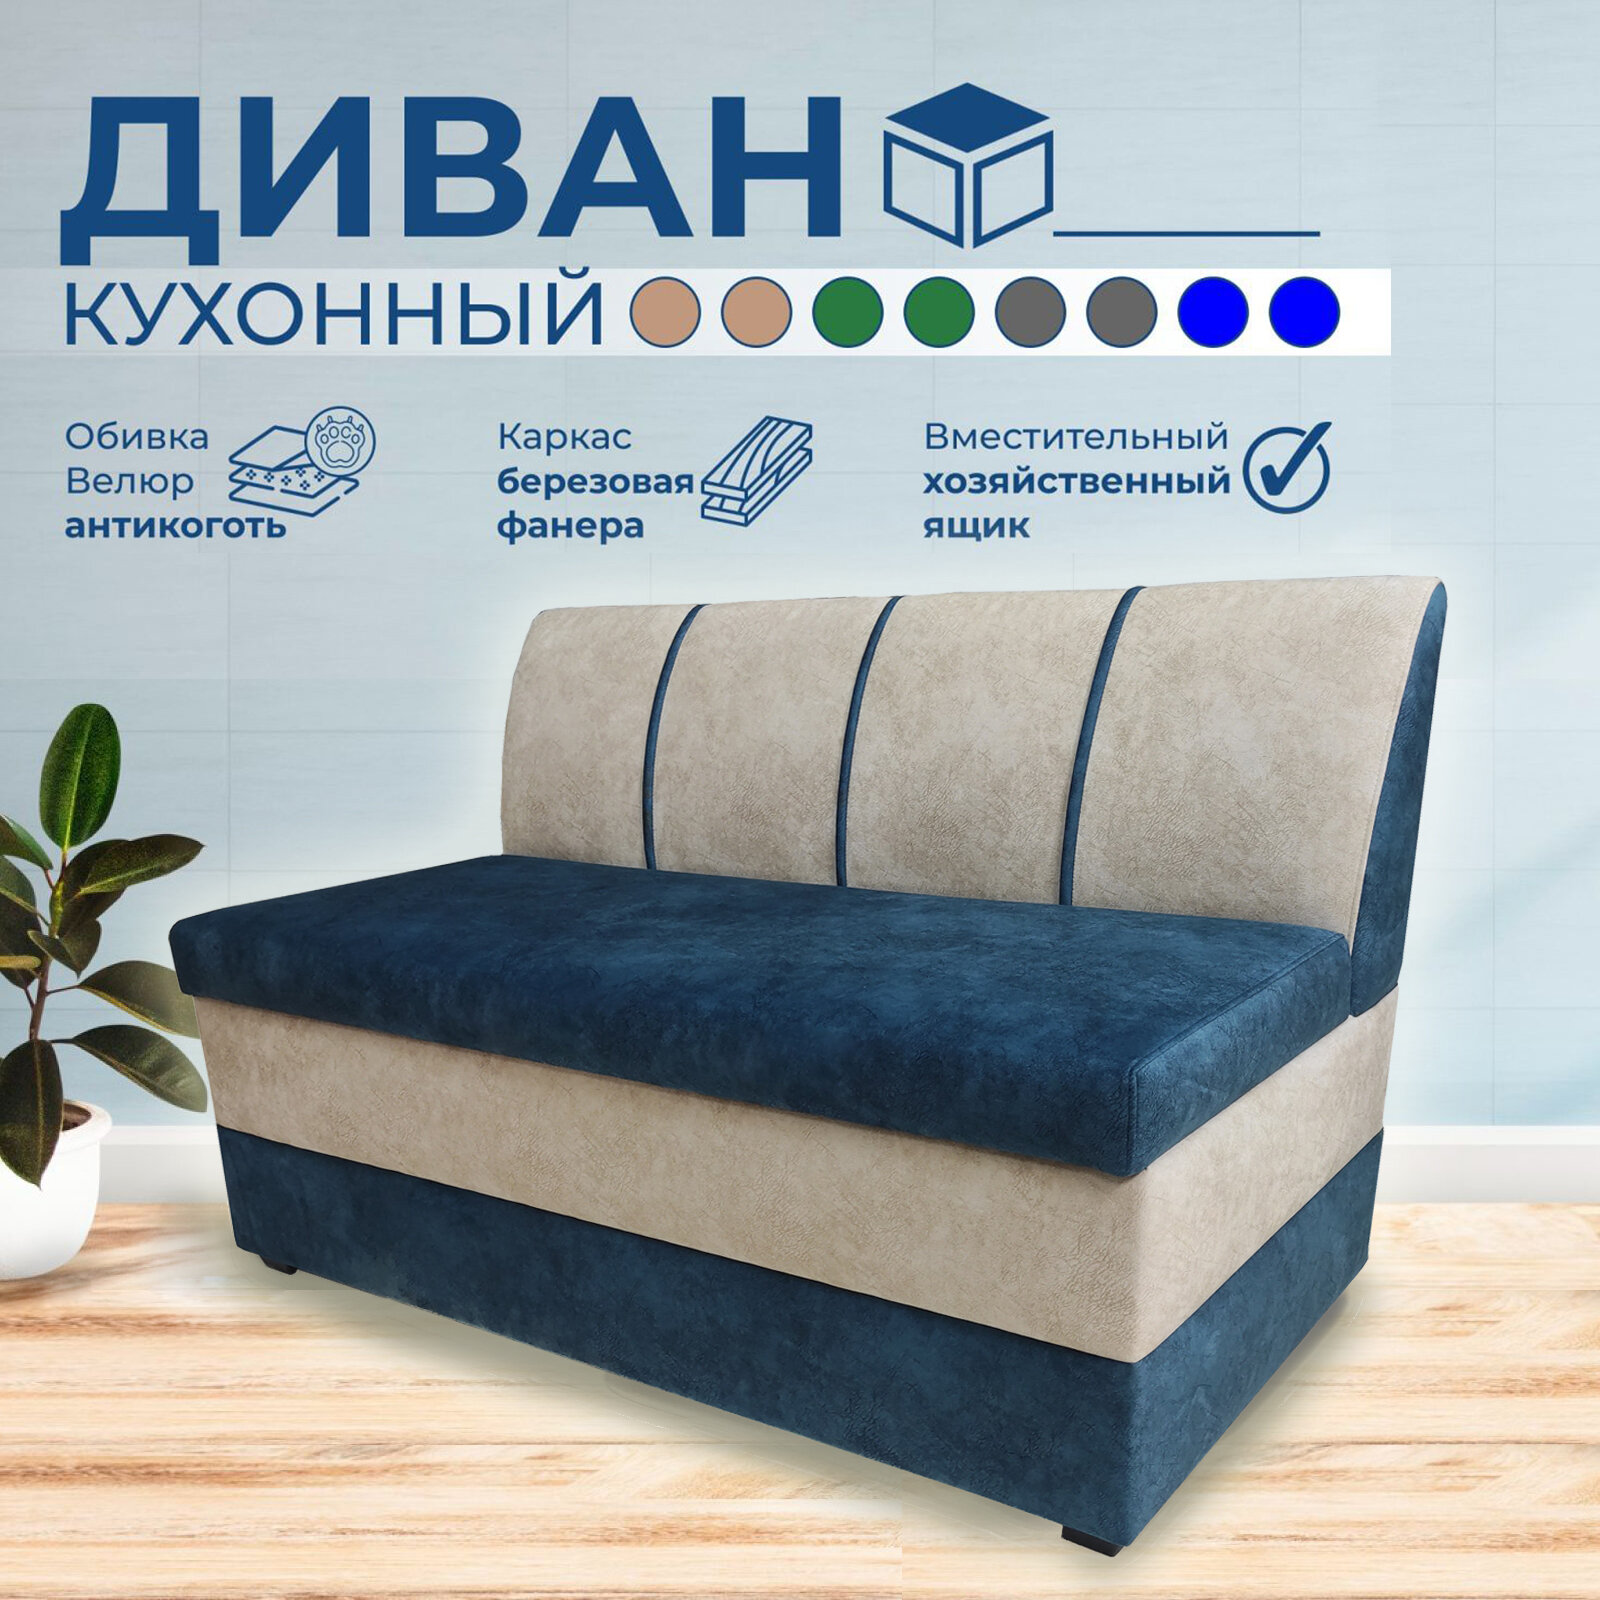 Кухонный диван Форум-8 (100см) Синий